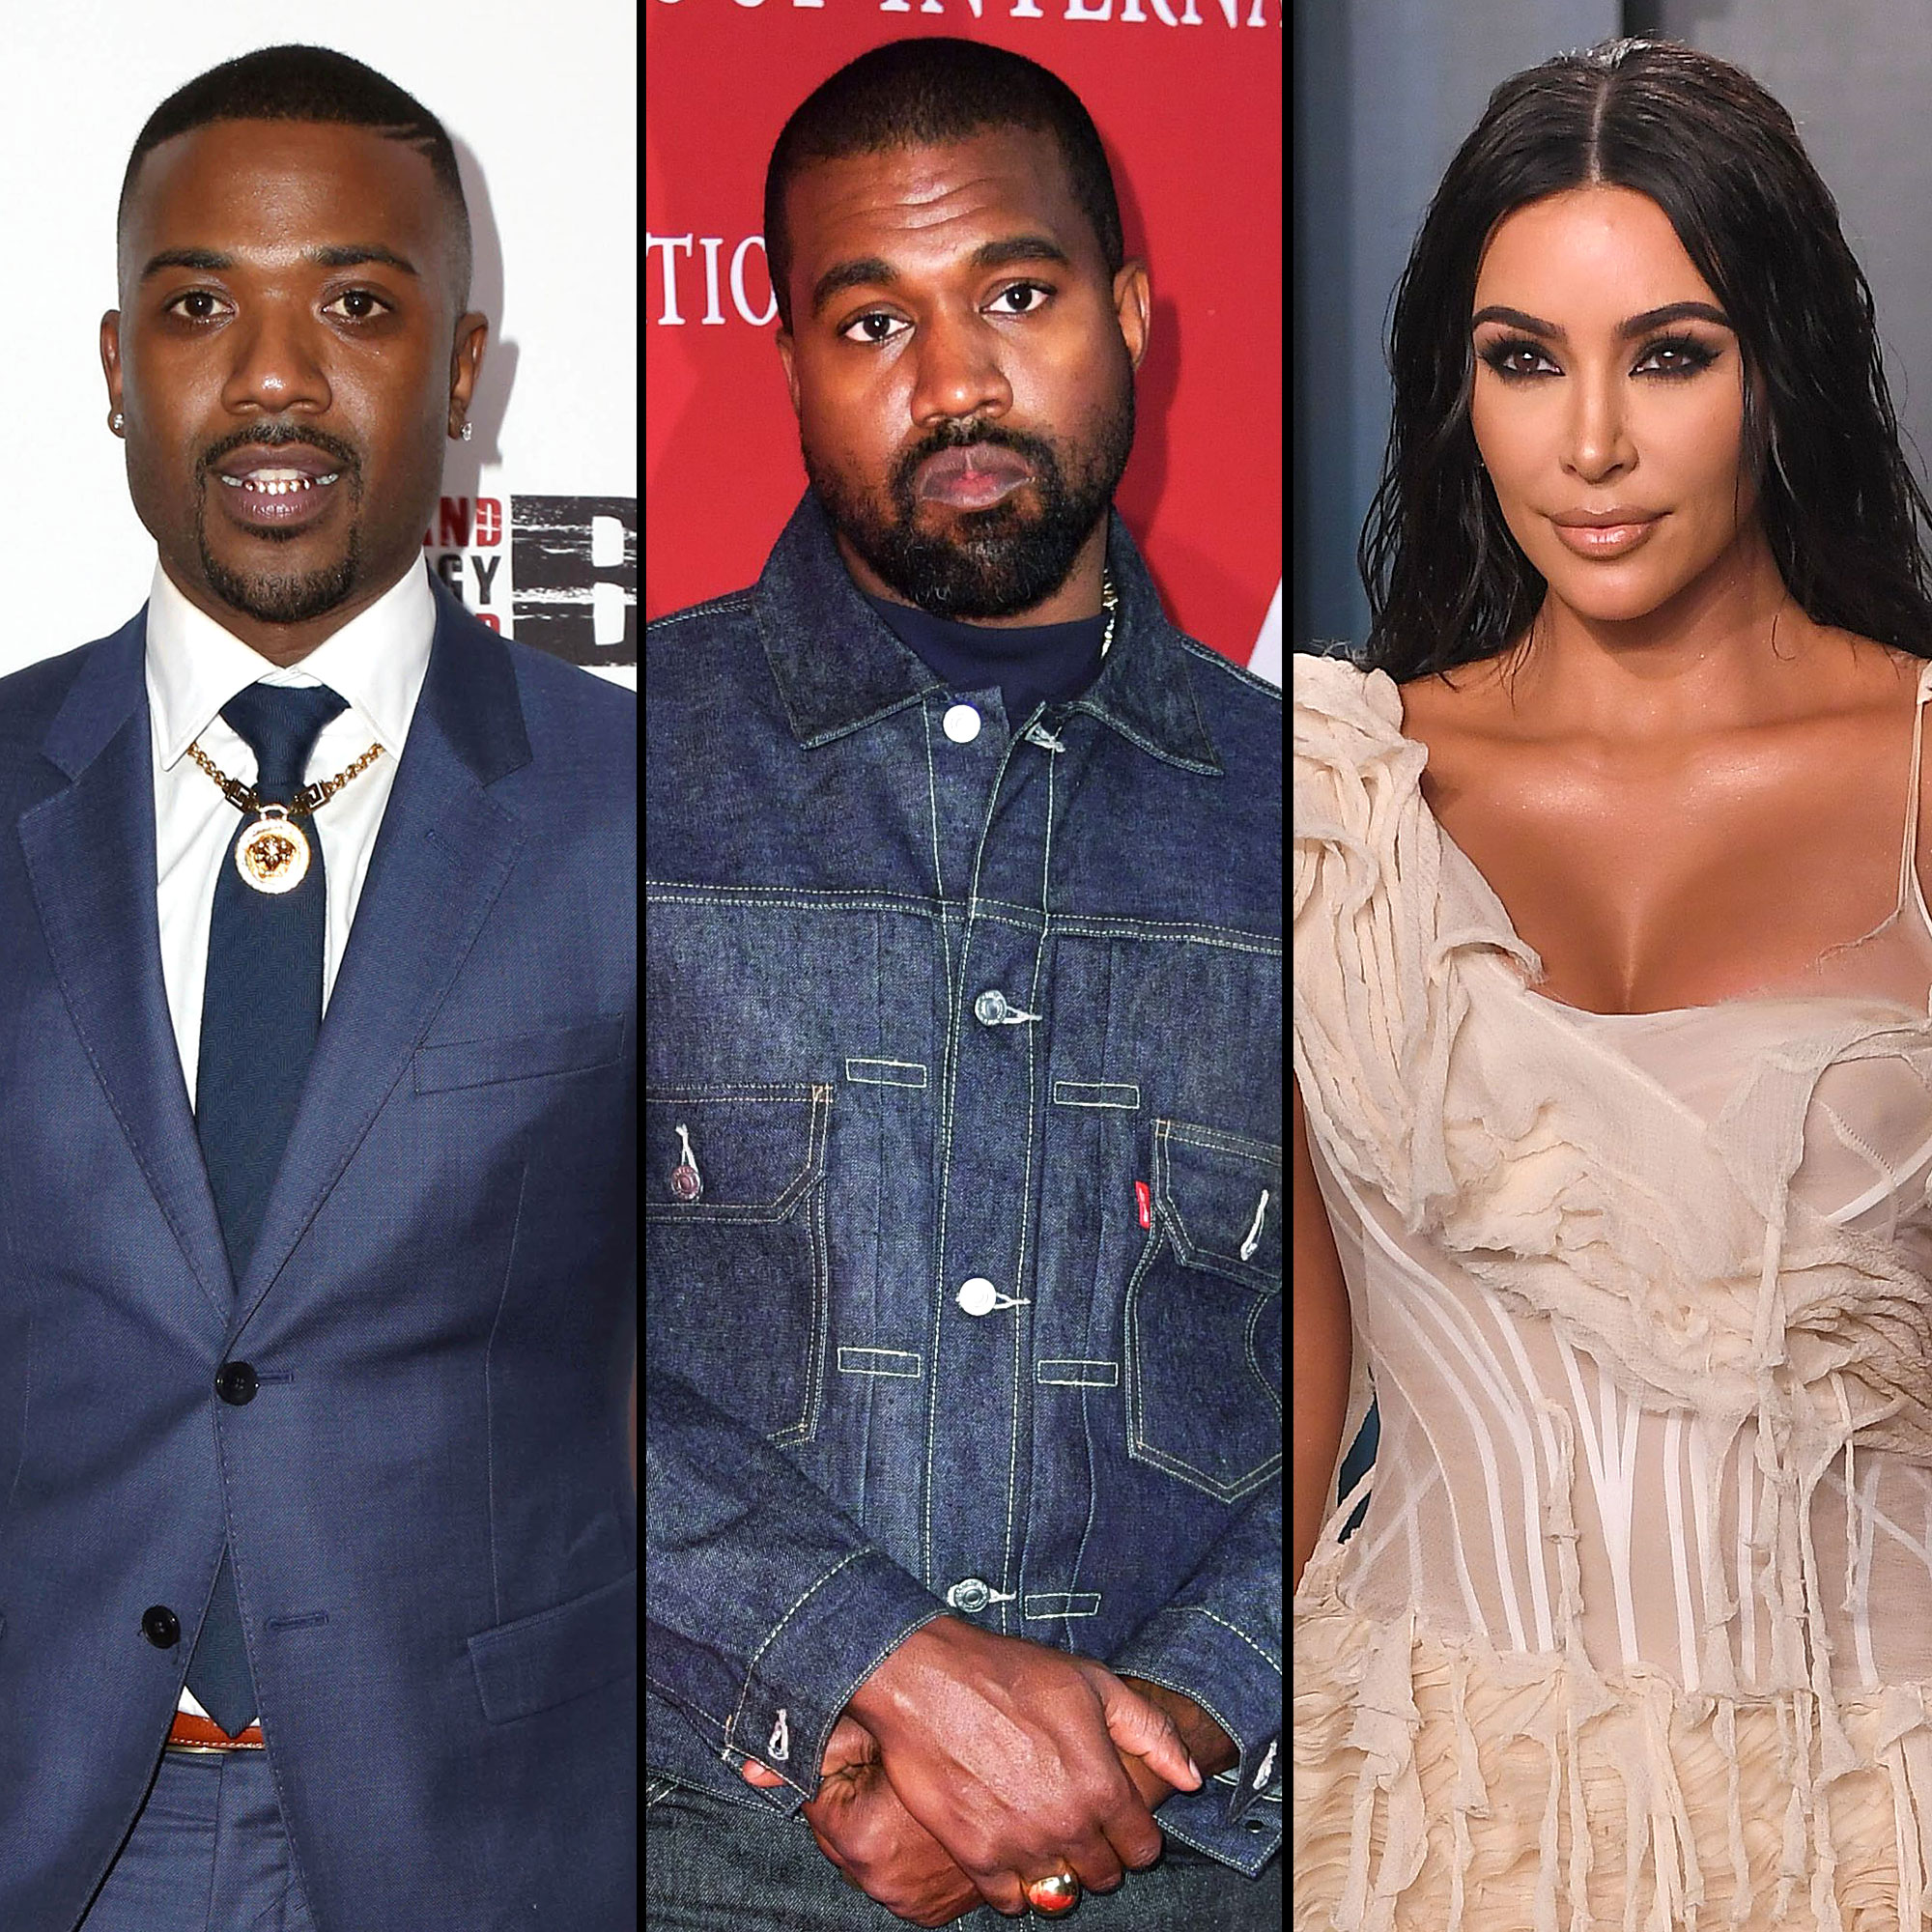 Ray J Claims Kanye, Kim Kardashian Sex Tape Narrative Is a Lie pic